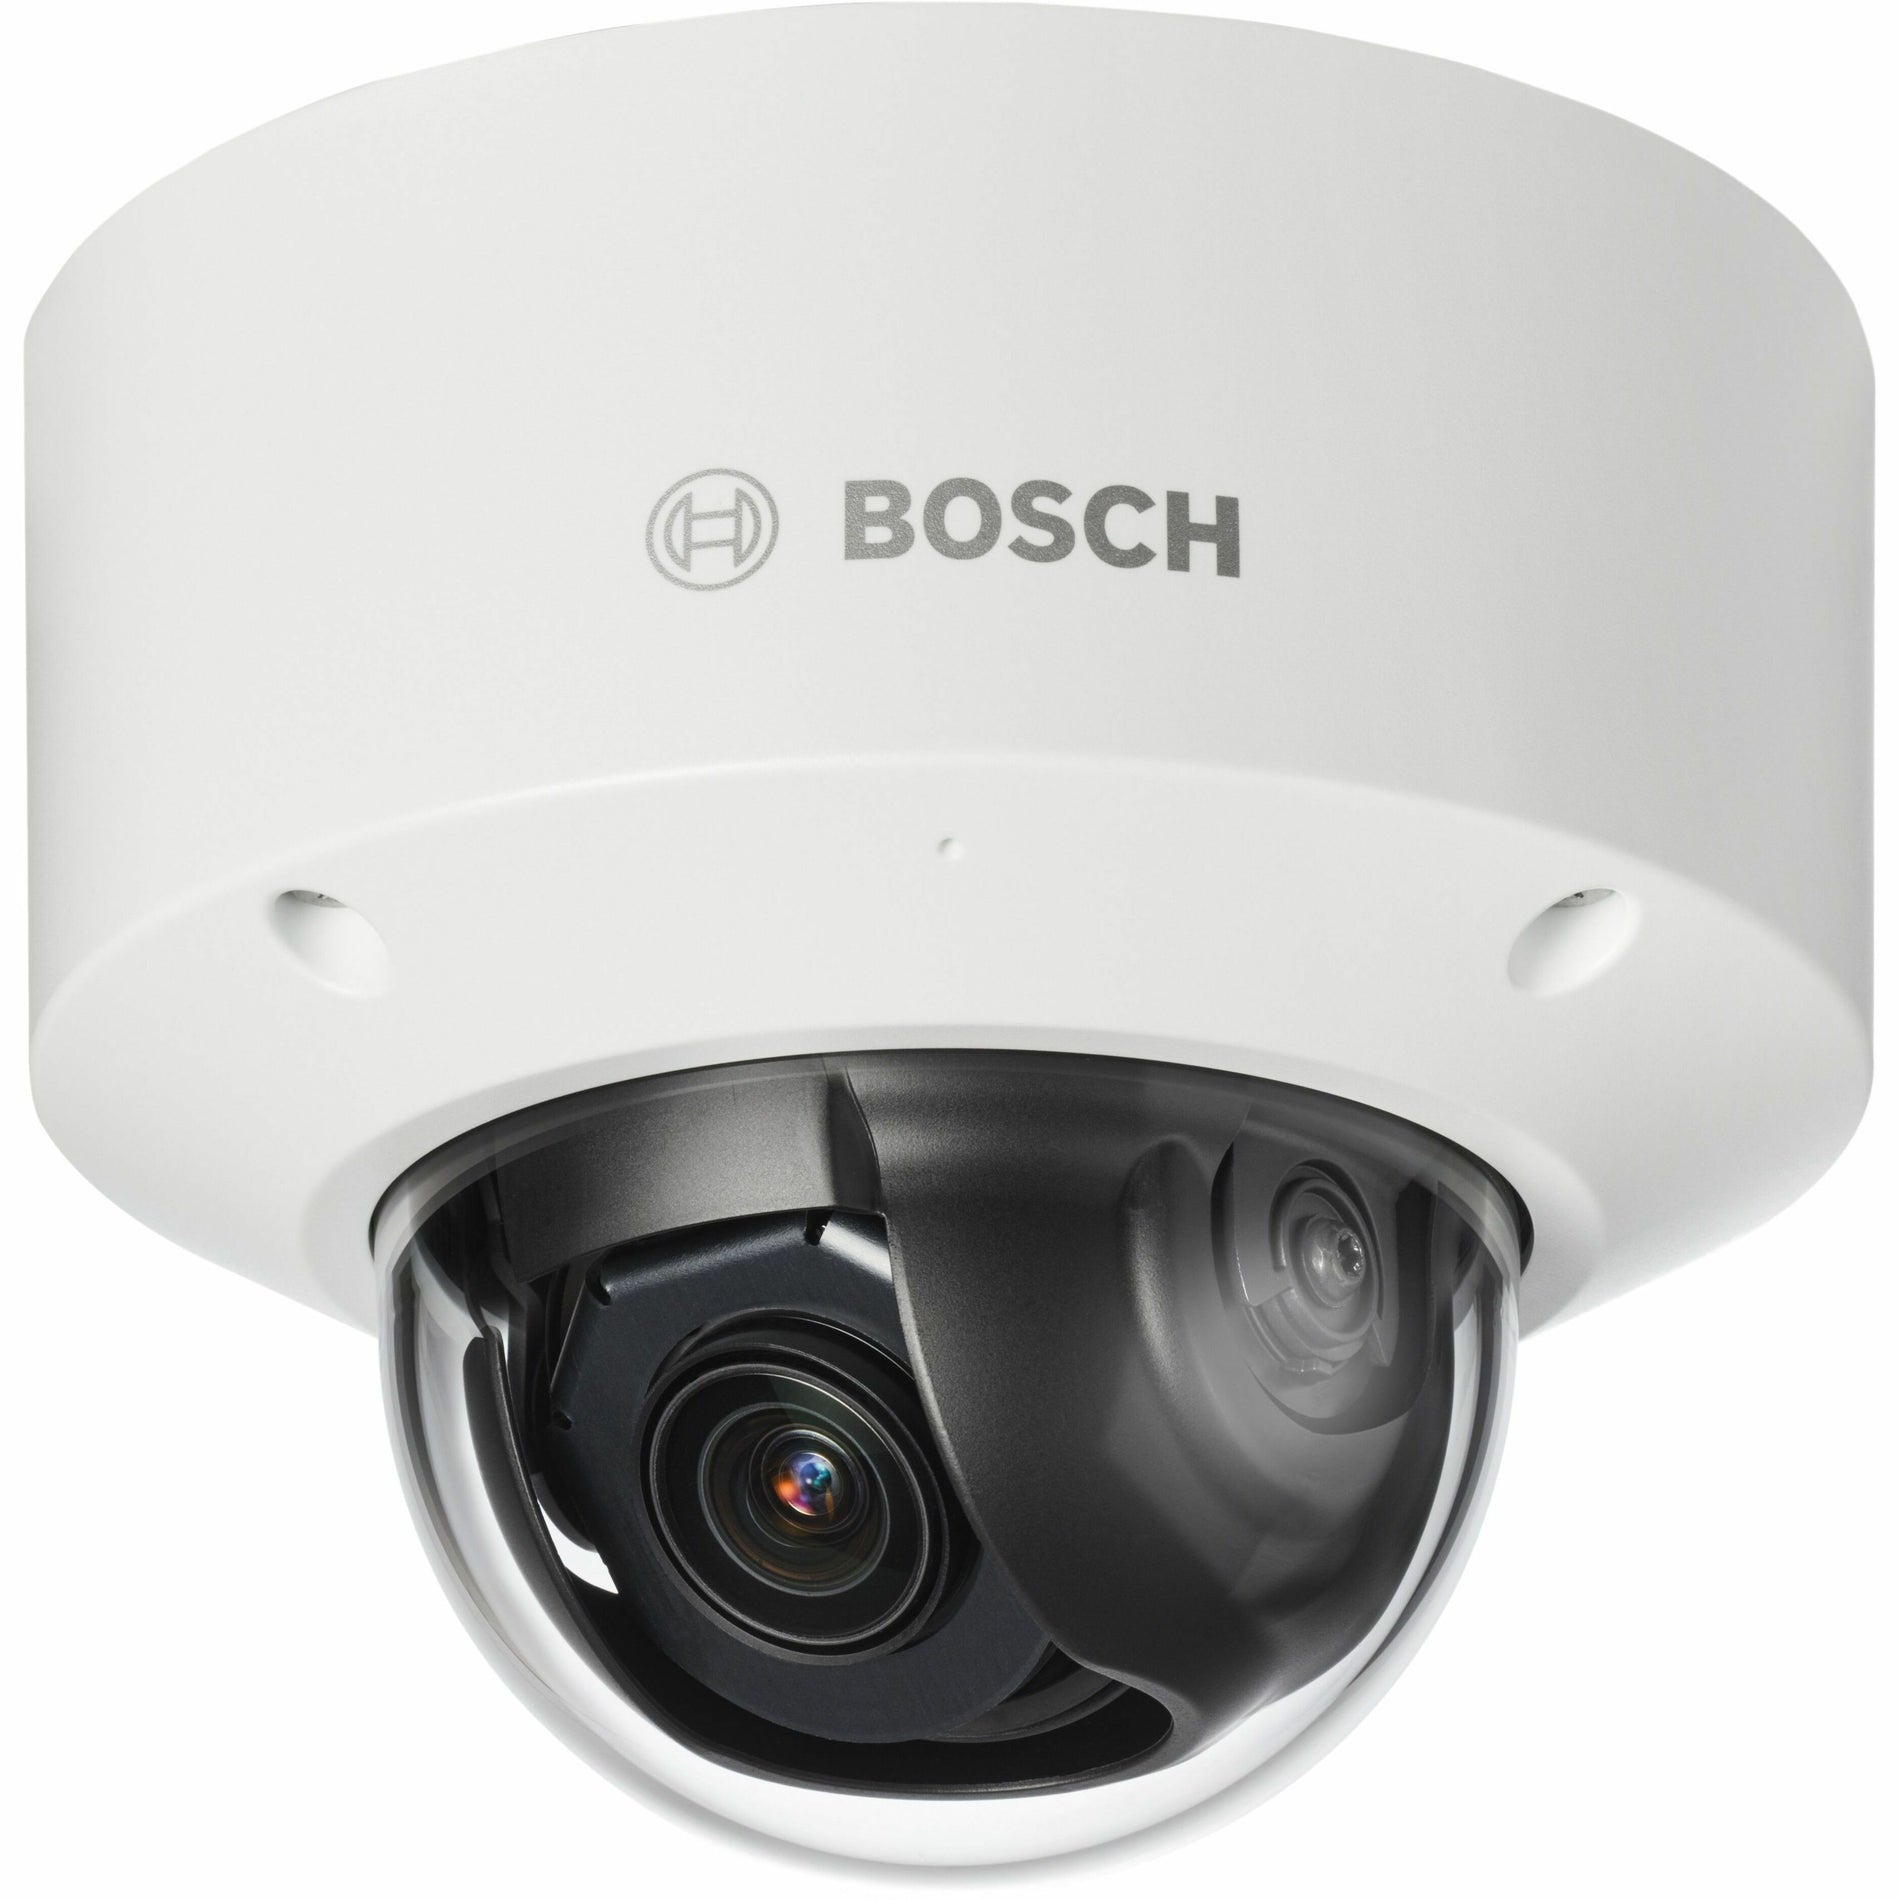 Bosch FlexiDome 8000i NDV-8503-R Network Camera, 6 Megapixel, Varifocal Lens, Indoor, IP54